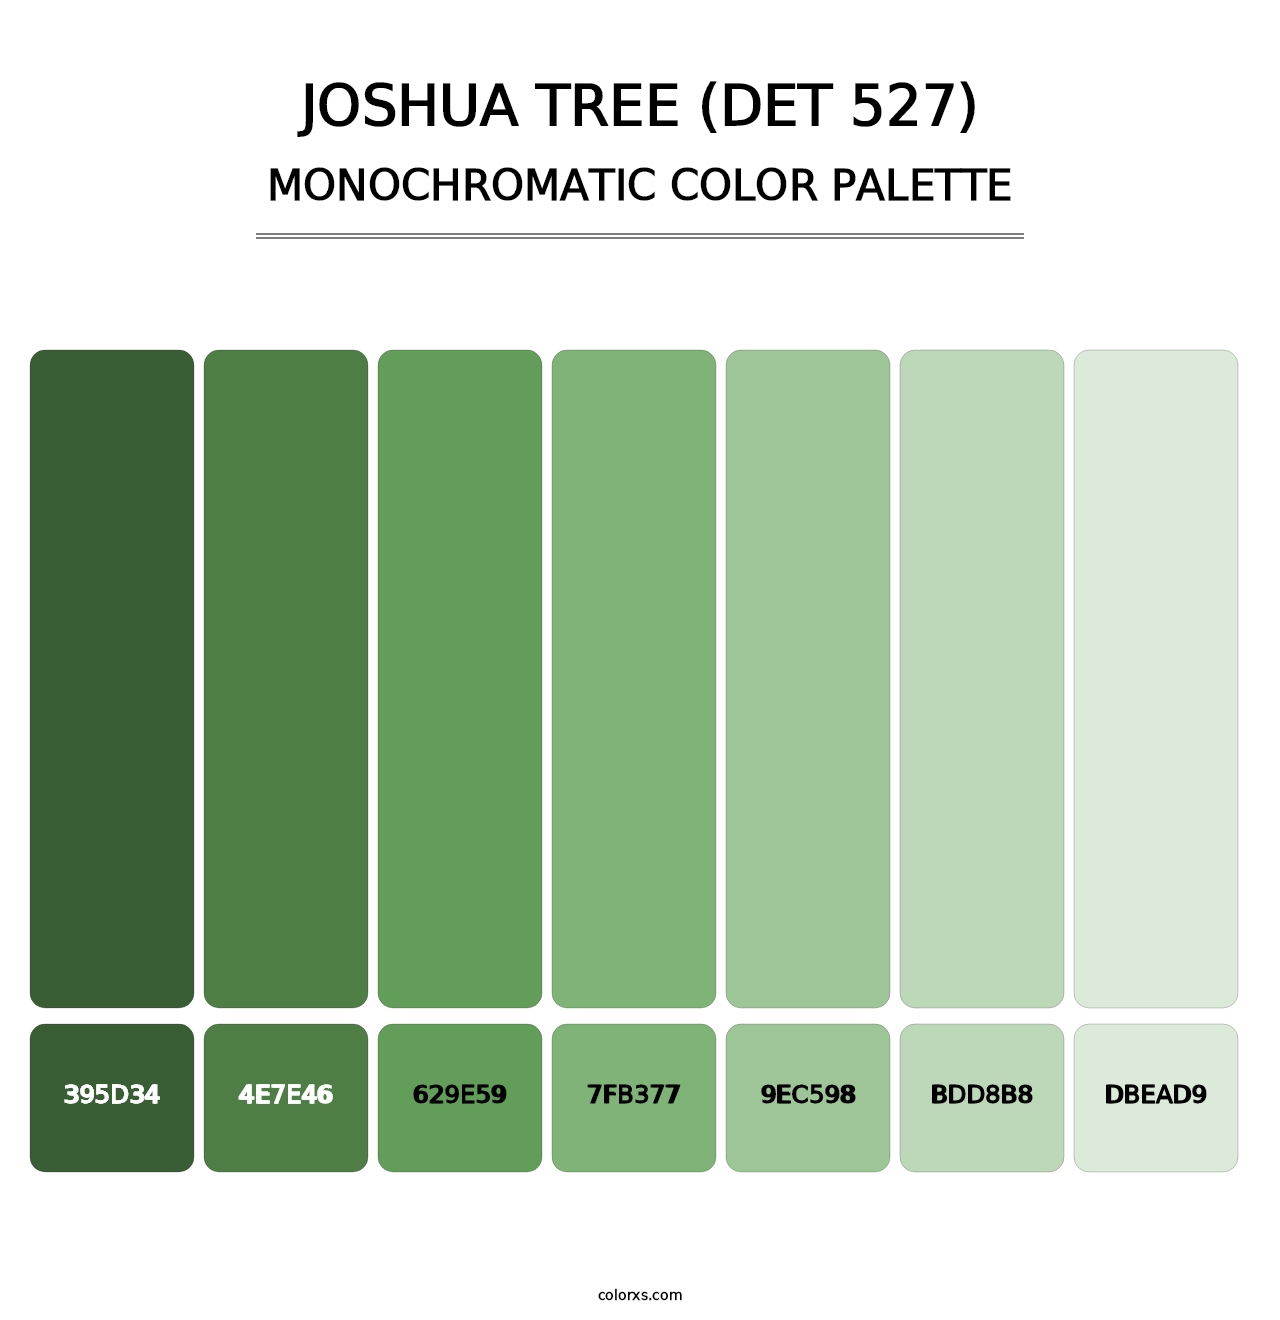 Joshua Tree (DET 527) - Monochromatic Color Palette